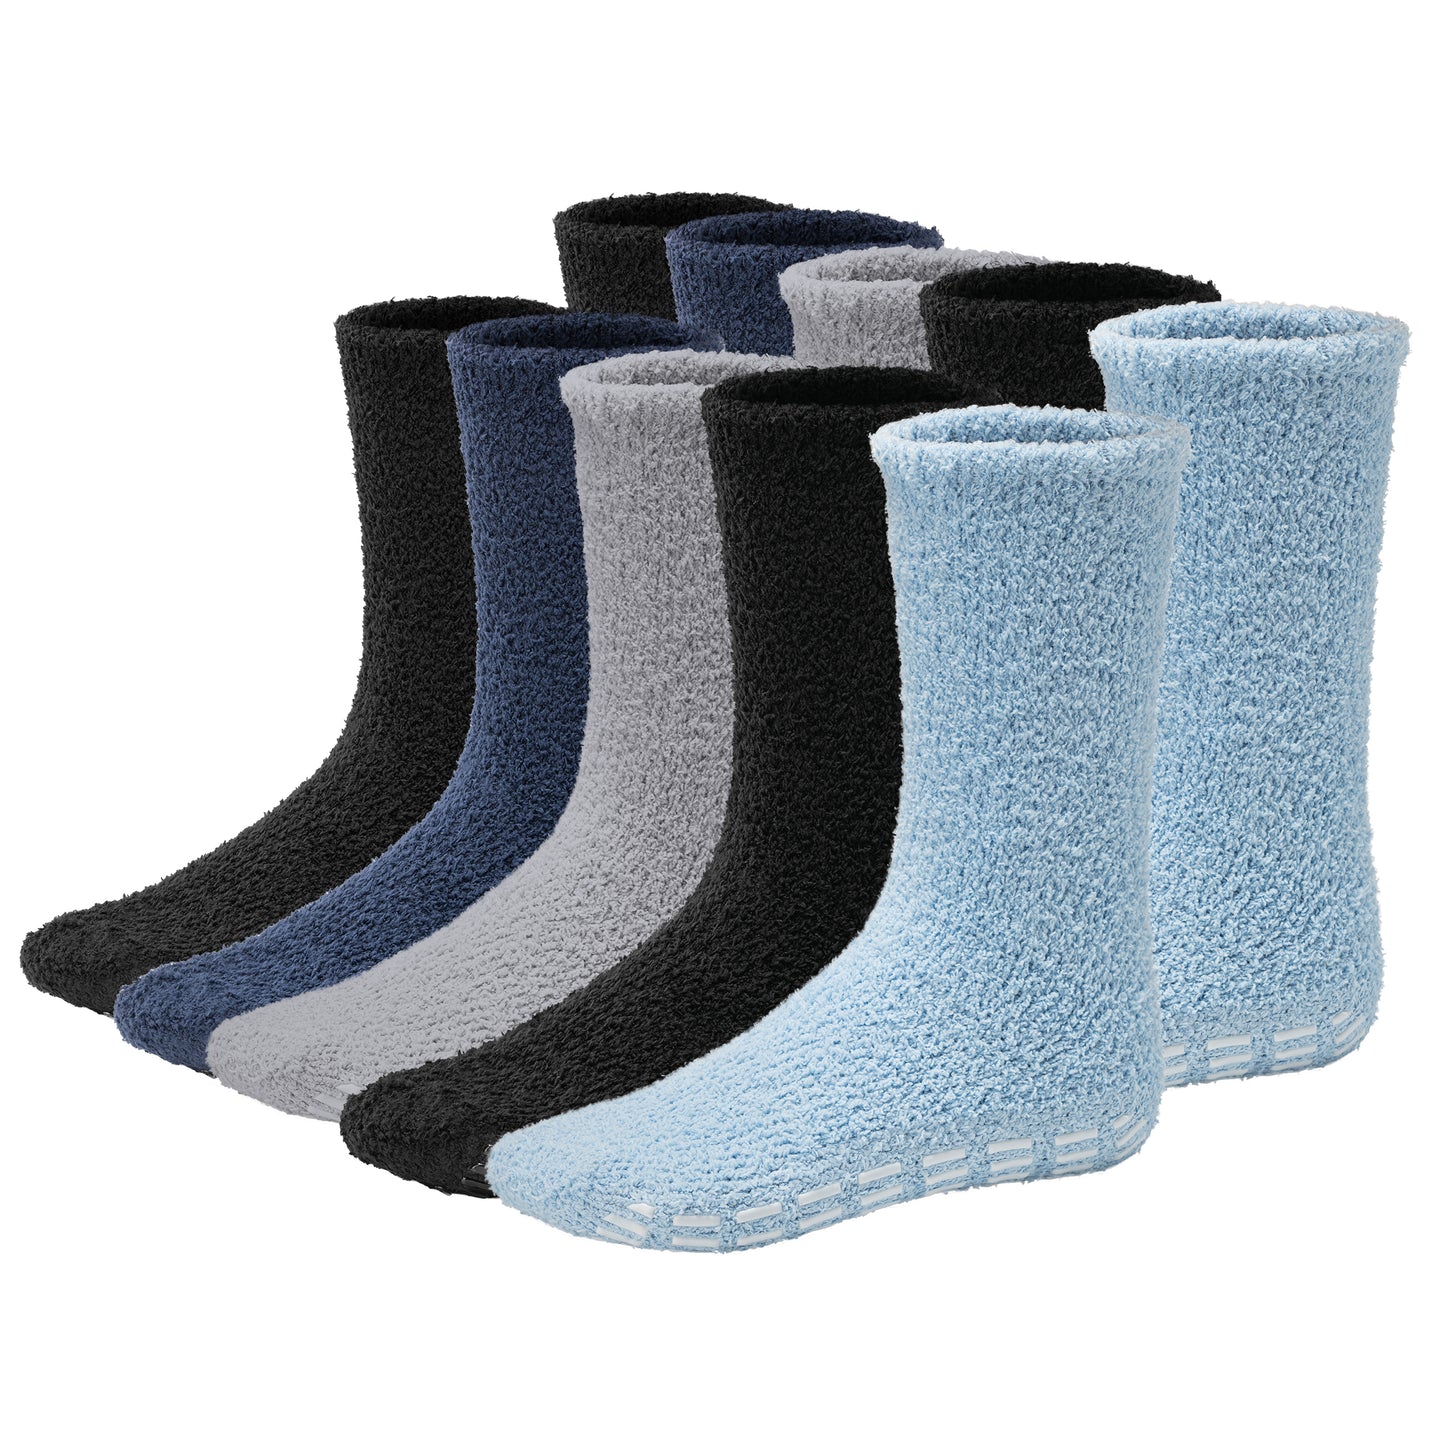 Fuzzy Men's Socks - 5 Pairs